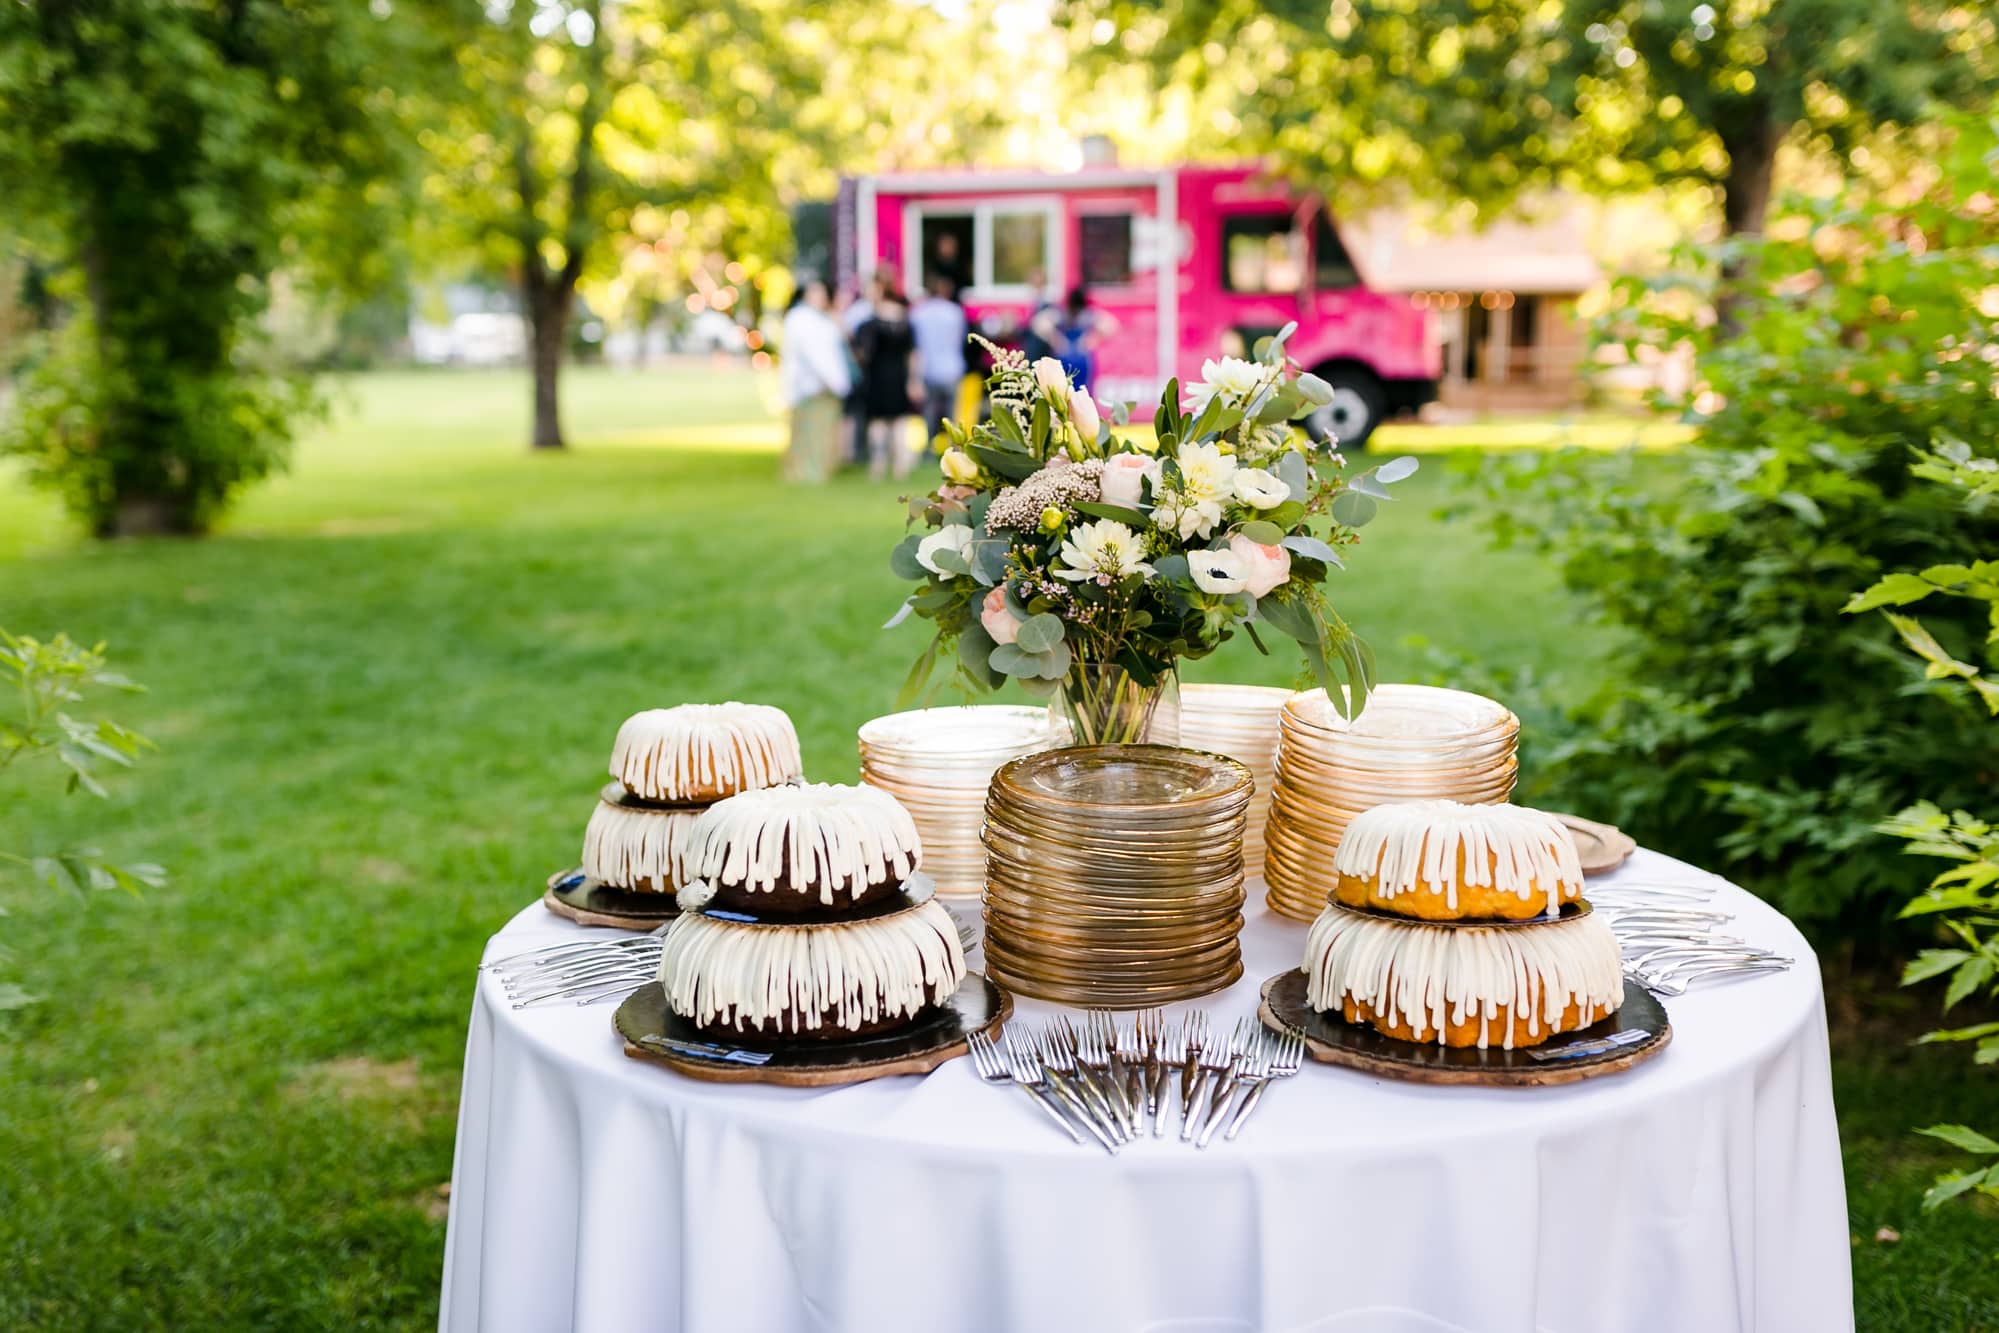 bundt cakes at wedding, bundt cake, nothing bundt cakes, pink food truck, food truck at weddings, unique wedding ideas, outdoor wedding, summer wedding